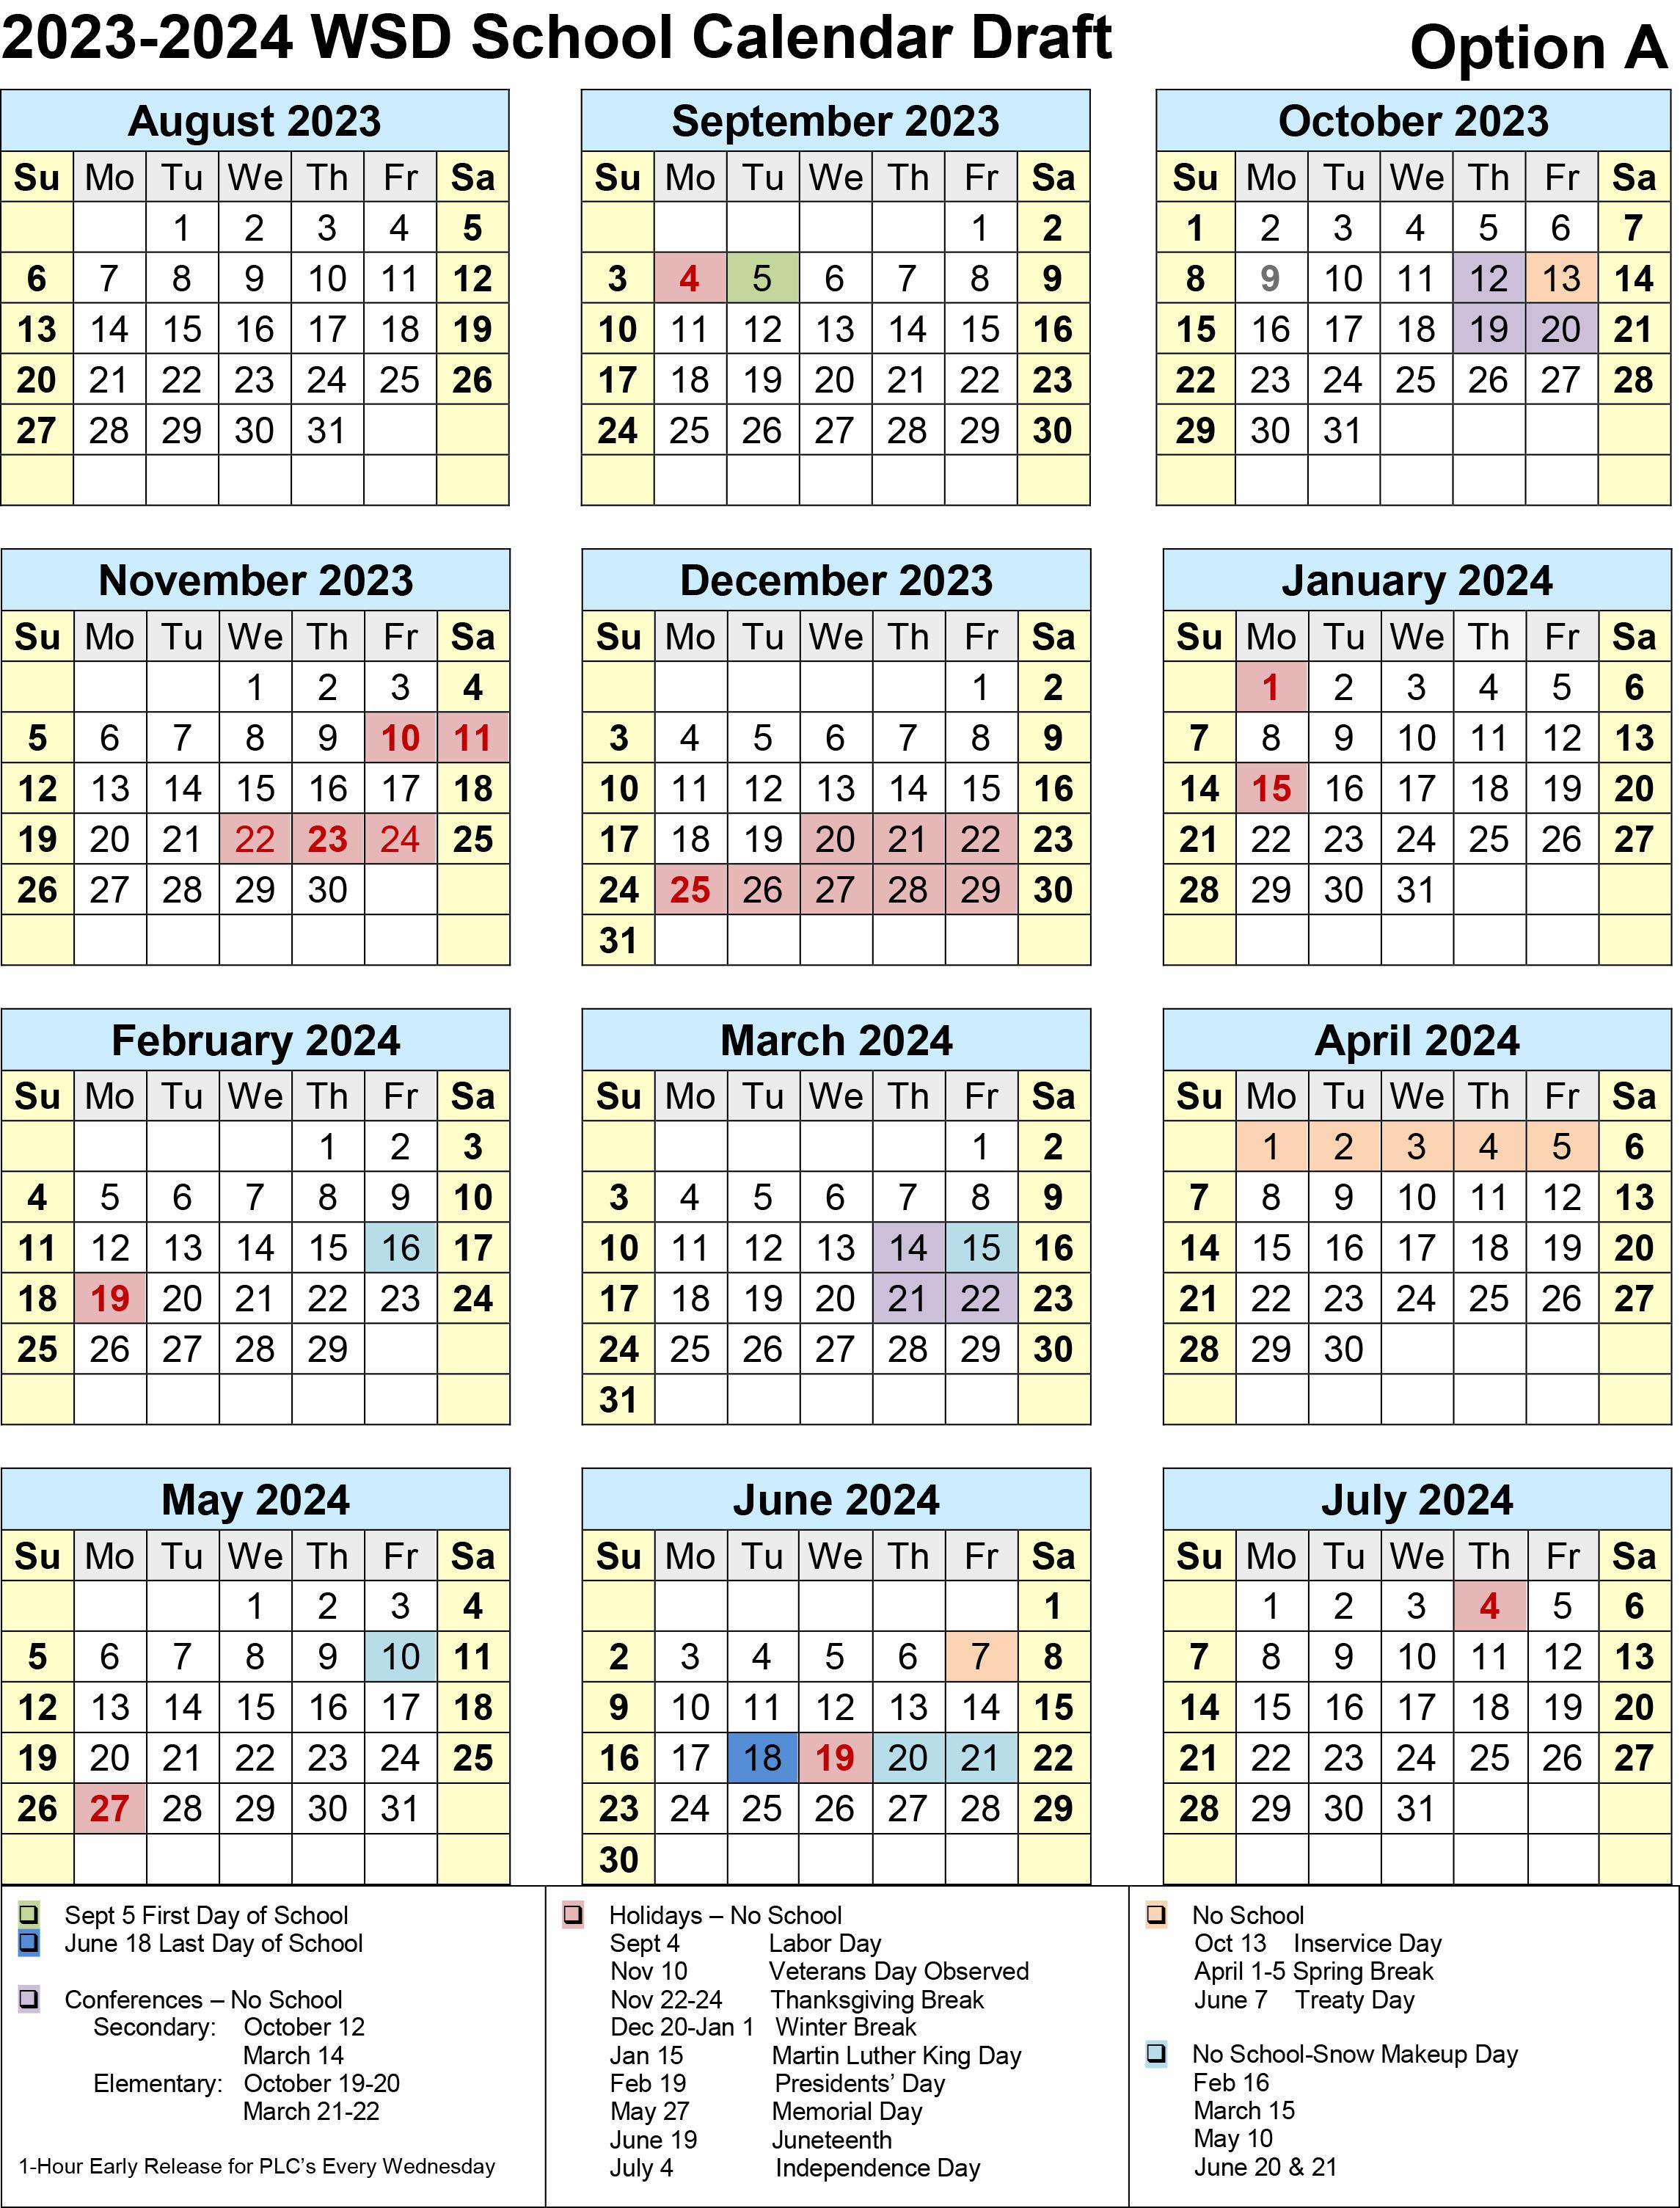 2023-2024 Calendar Option A